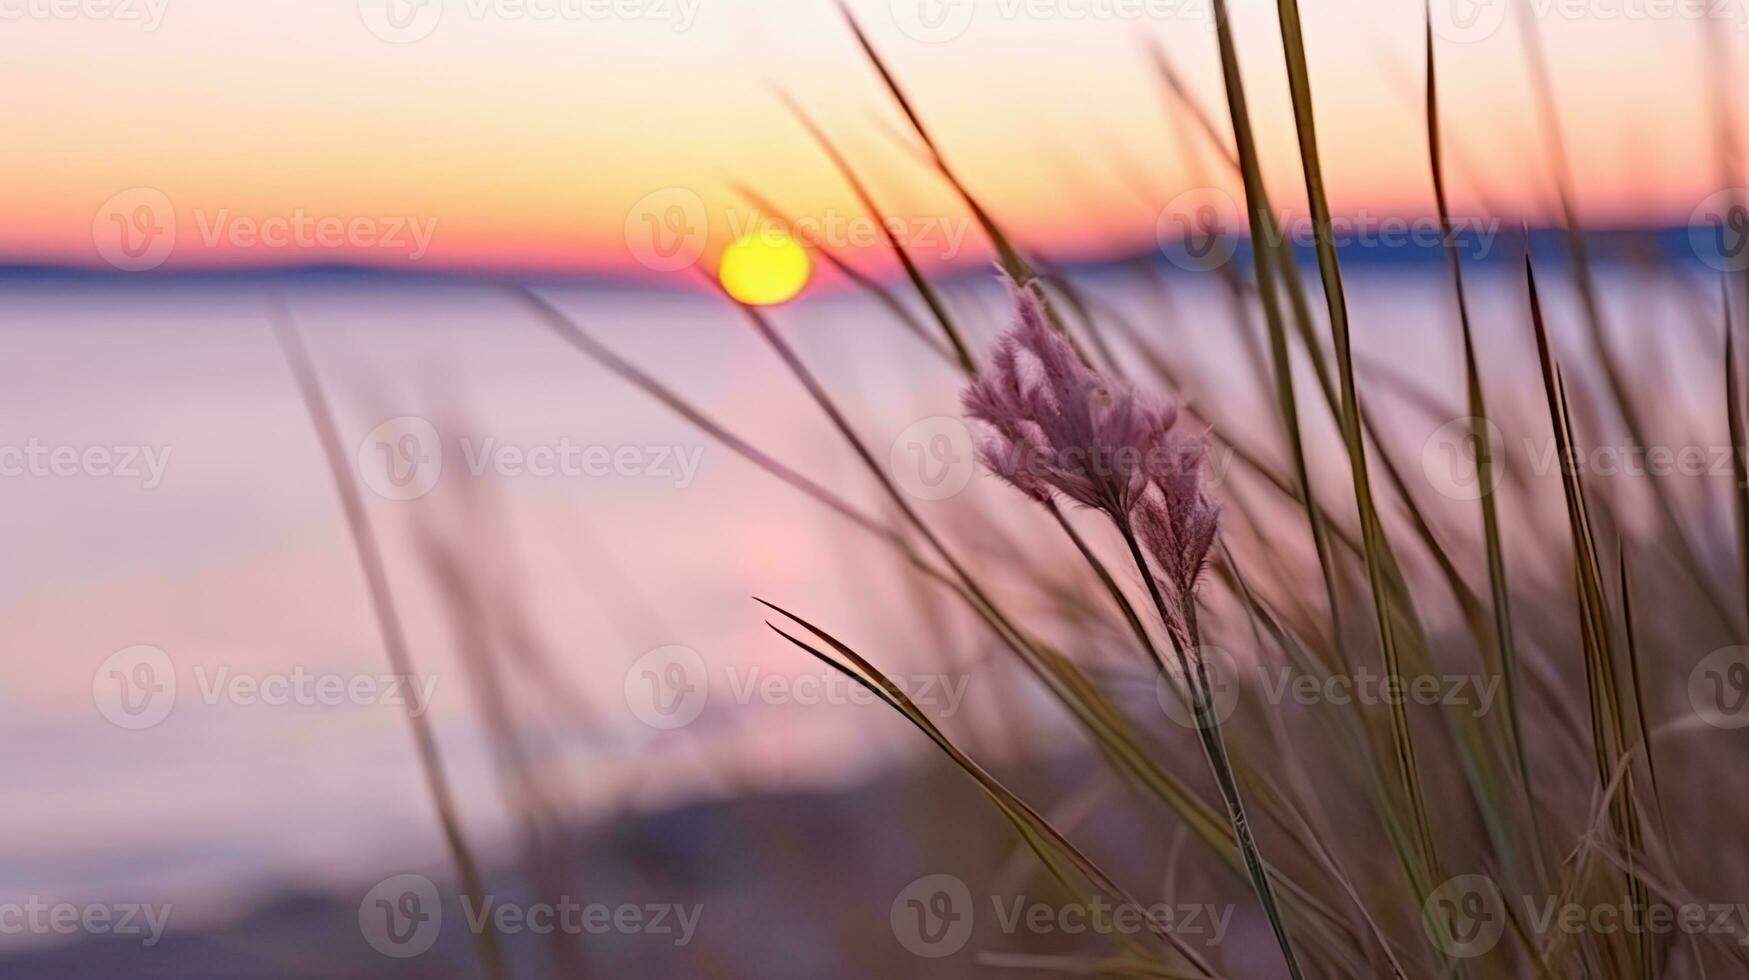 blommor fokus solnedgång lugn nåd landskap zen harmoni stillhet enhet harmoni fotografi foto